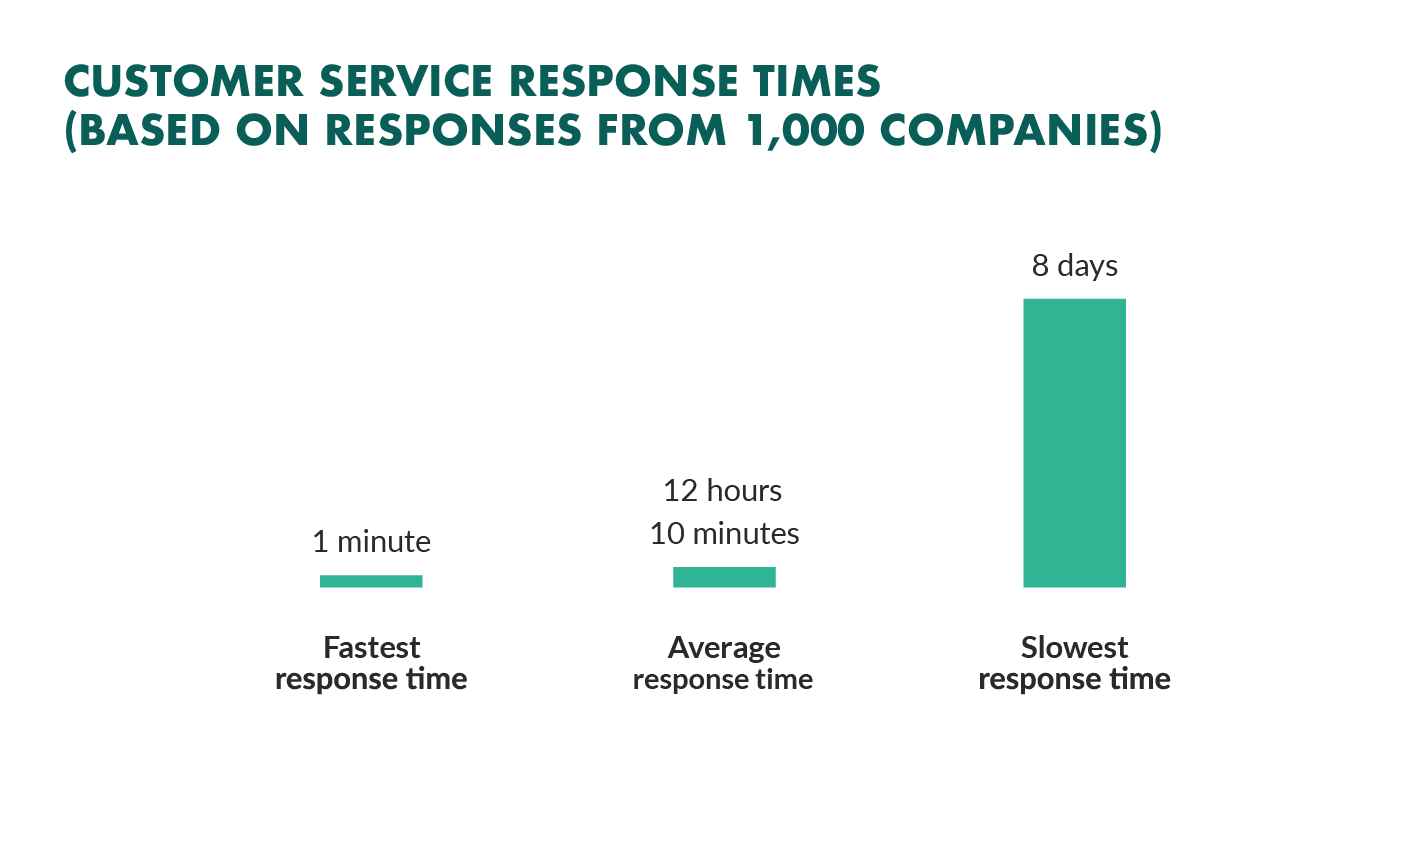 responsiveness to customers